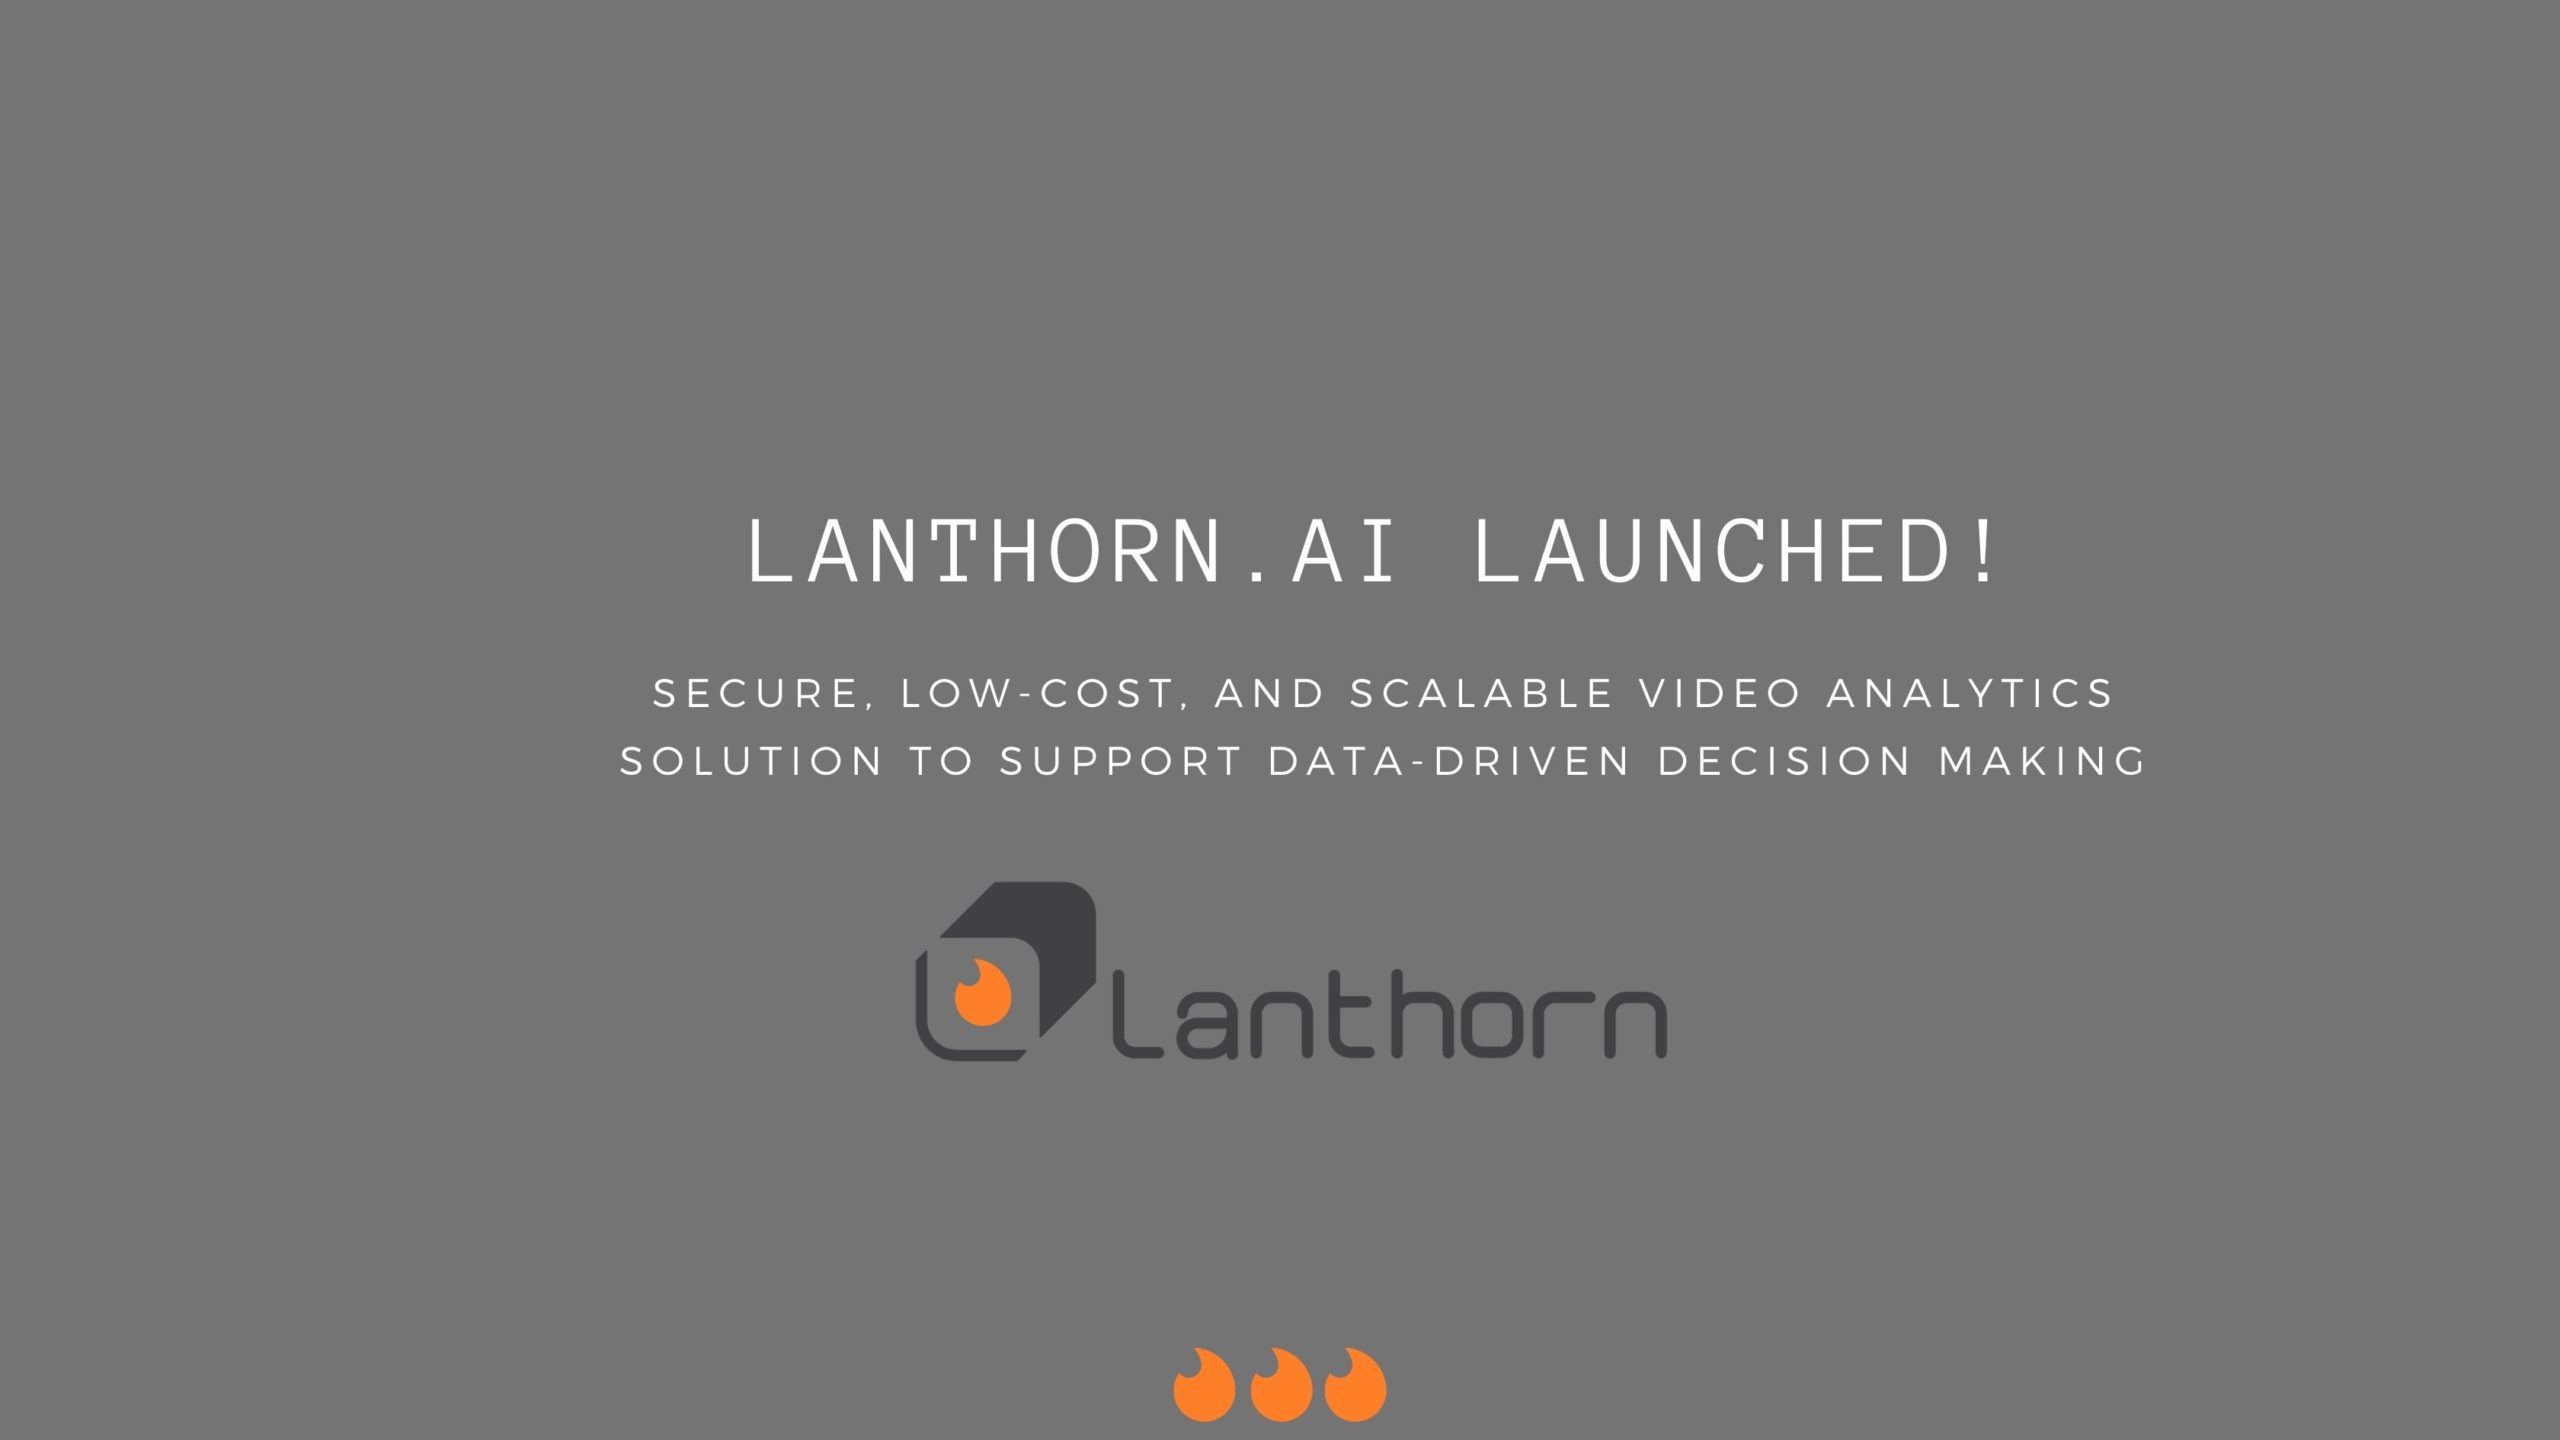 introducing lanthorn.ai